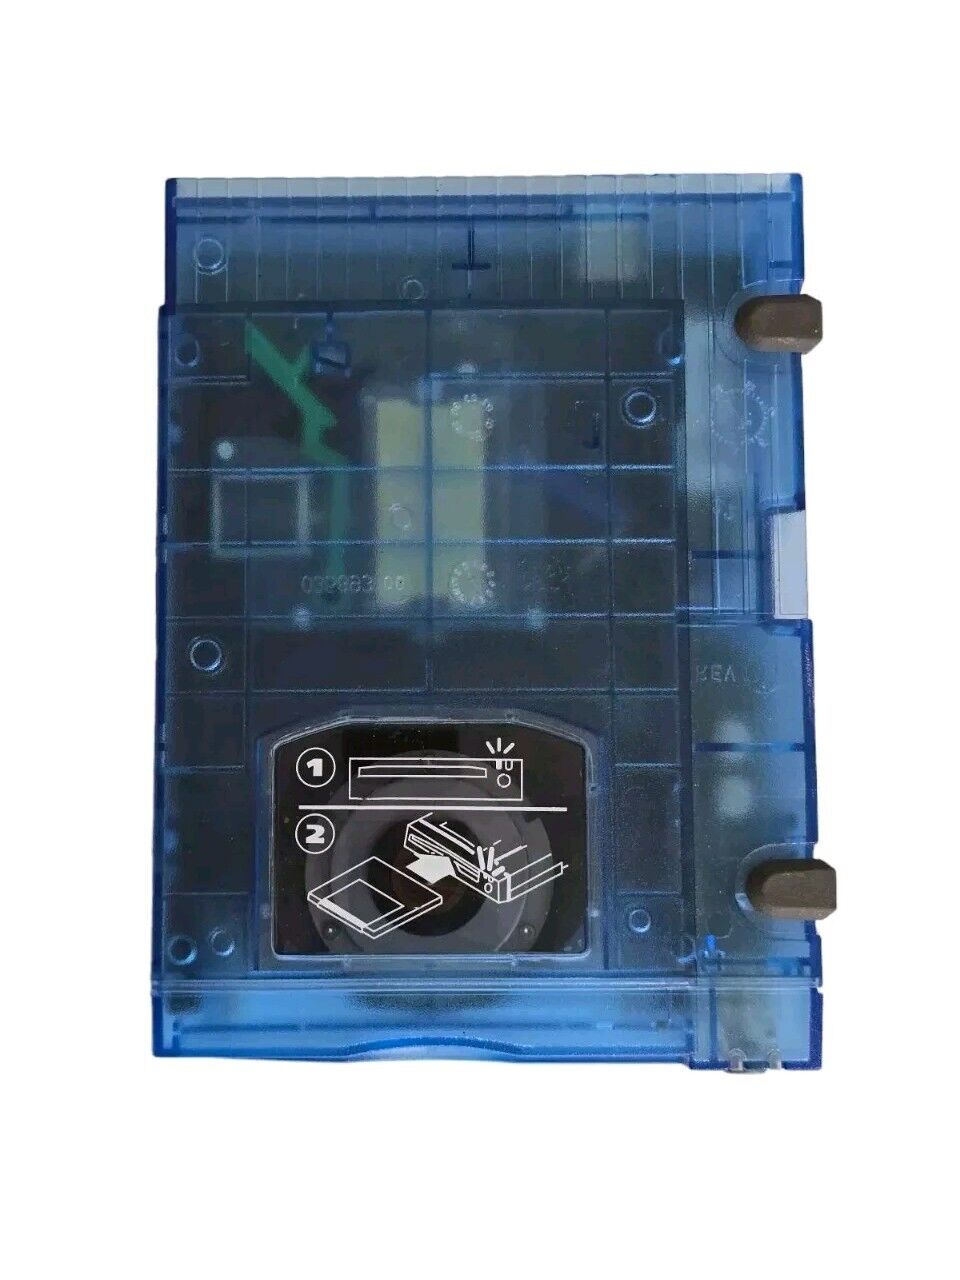 Iomega Zip 100 USB External Disk Drive Z100USB Translucent Blue Untested